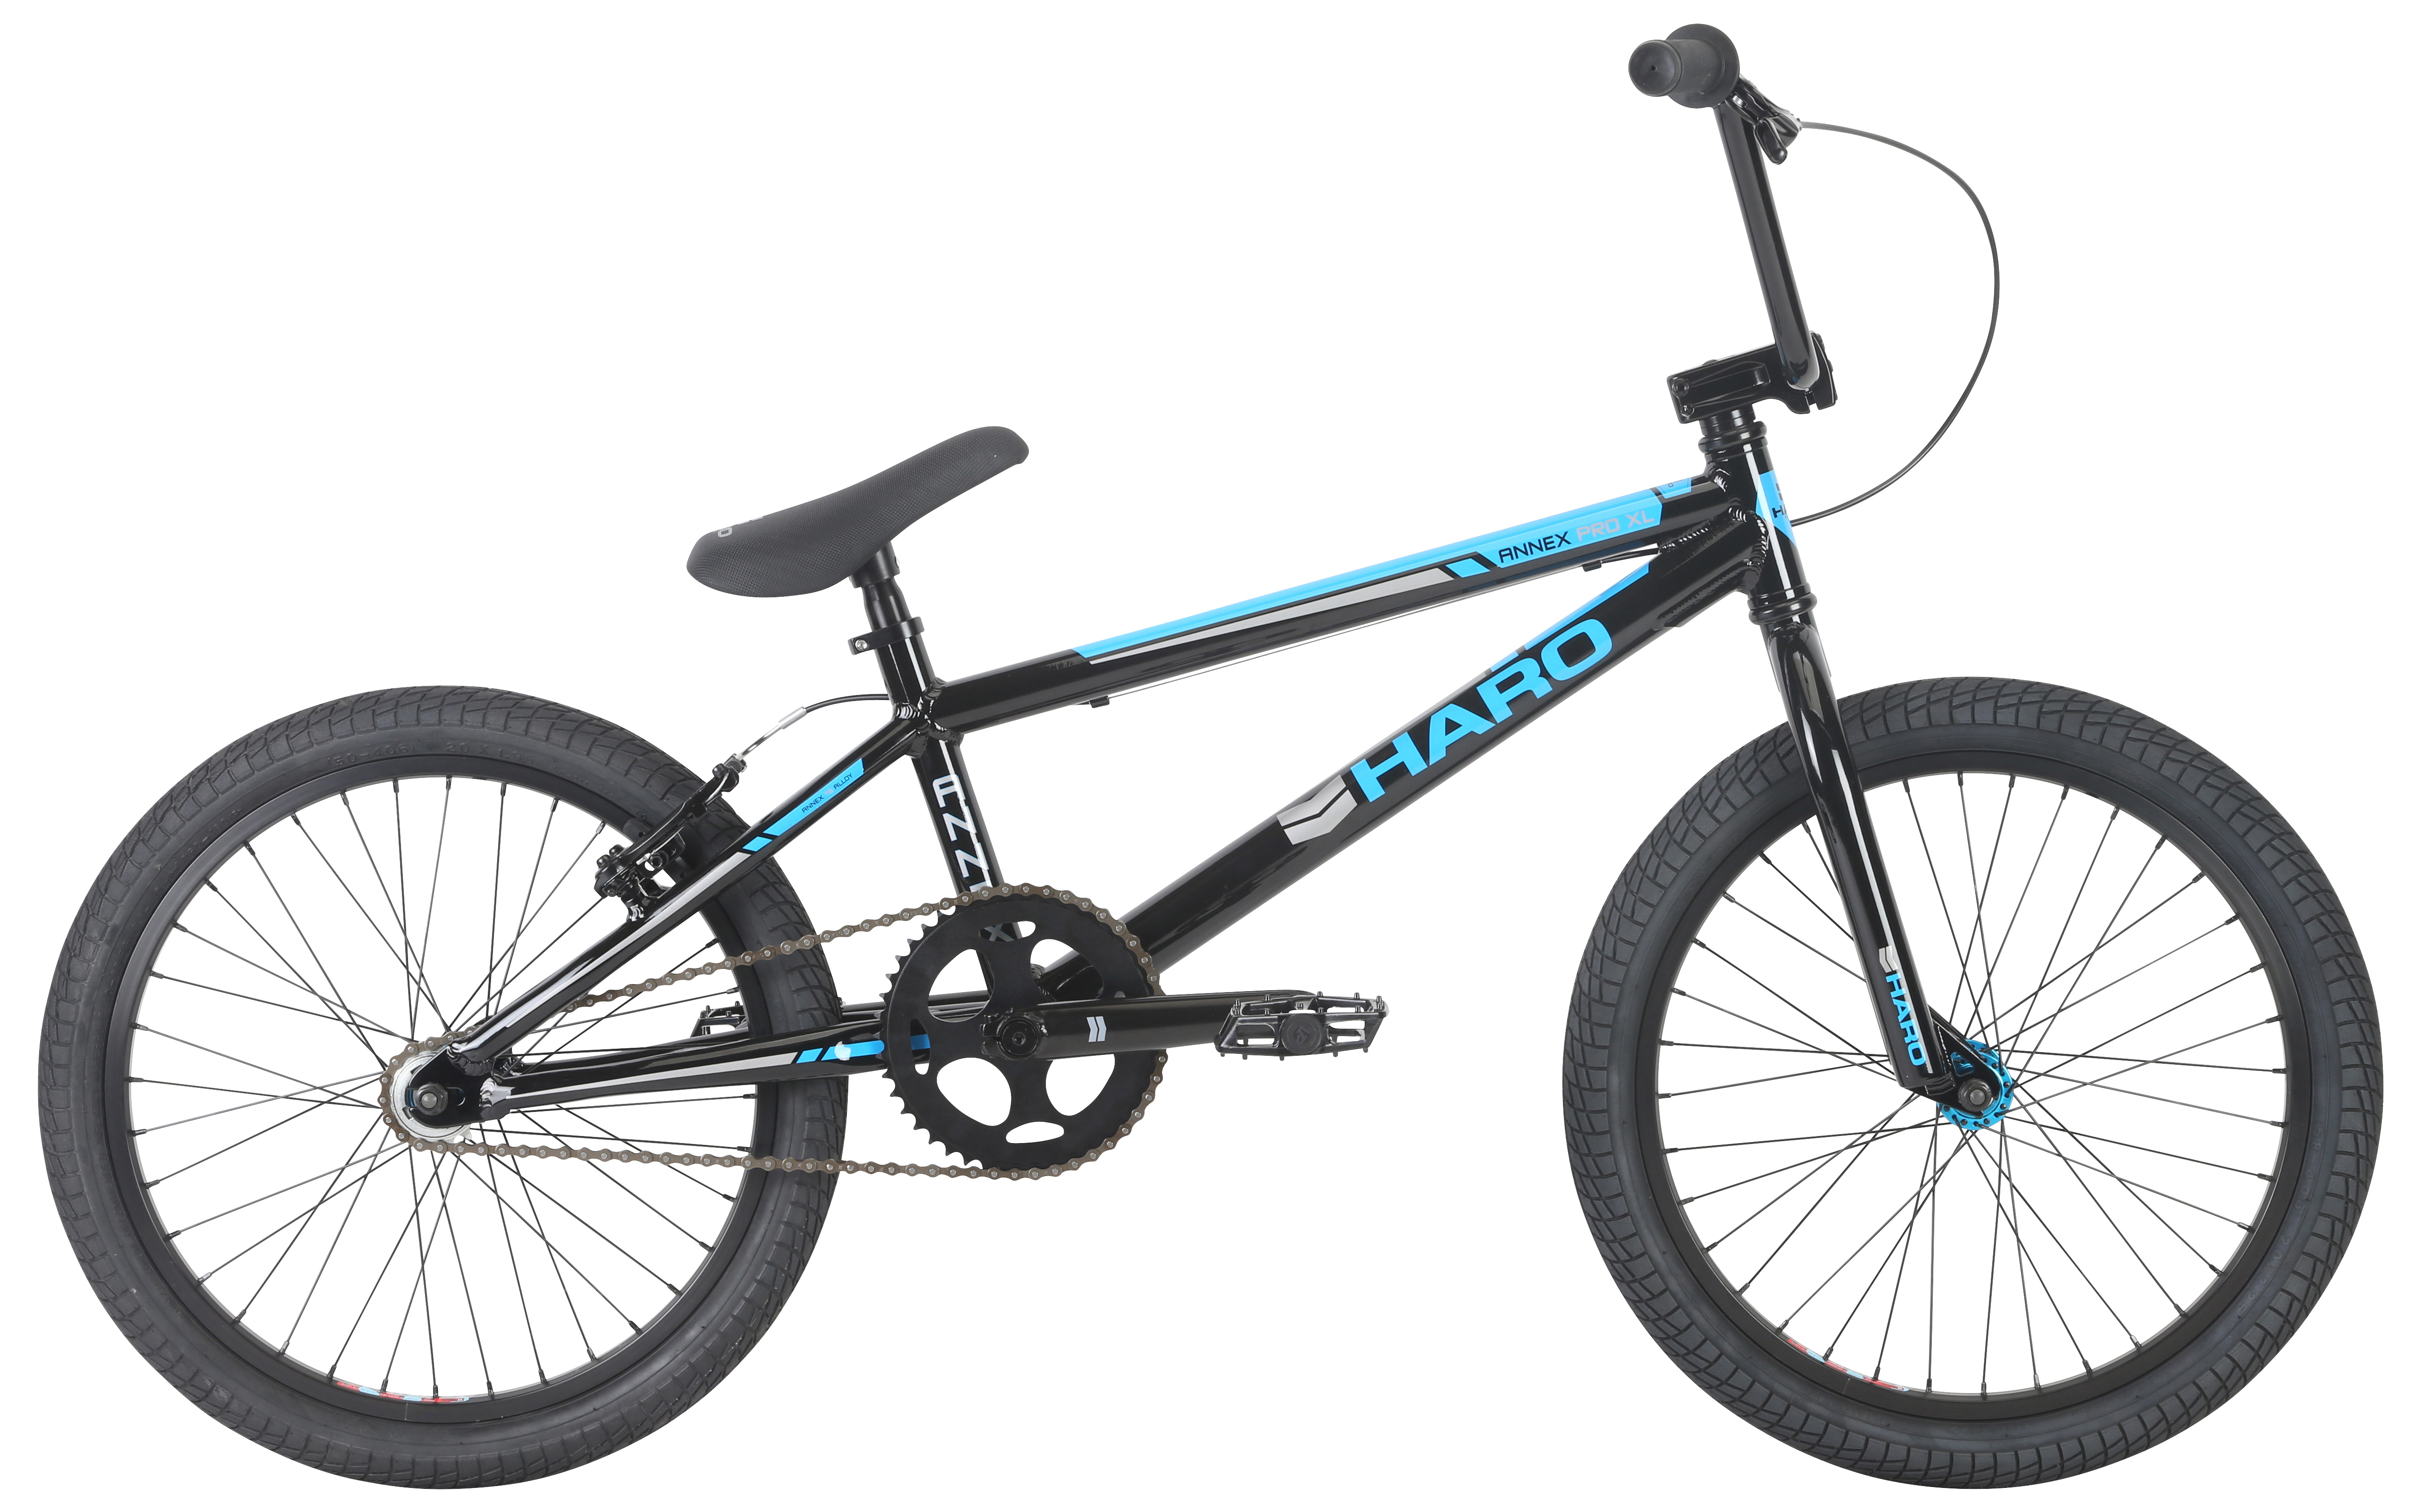  Отзывы о Велосипеде BMX Haro Annex Pro XL 2019